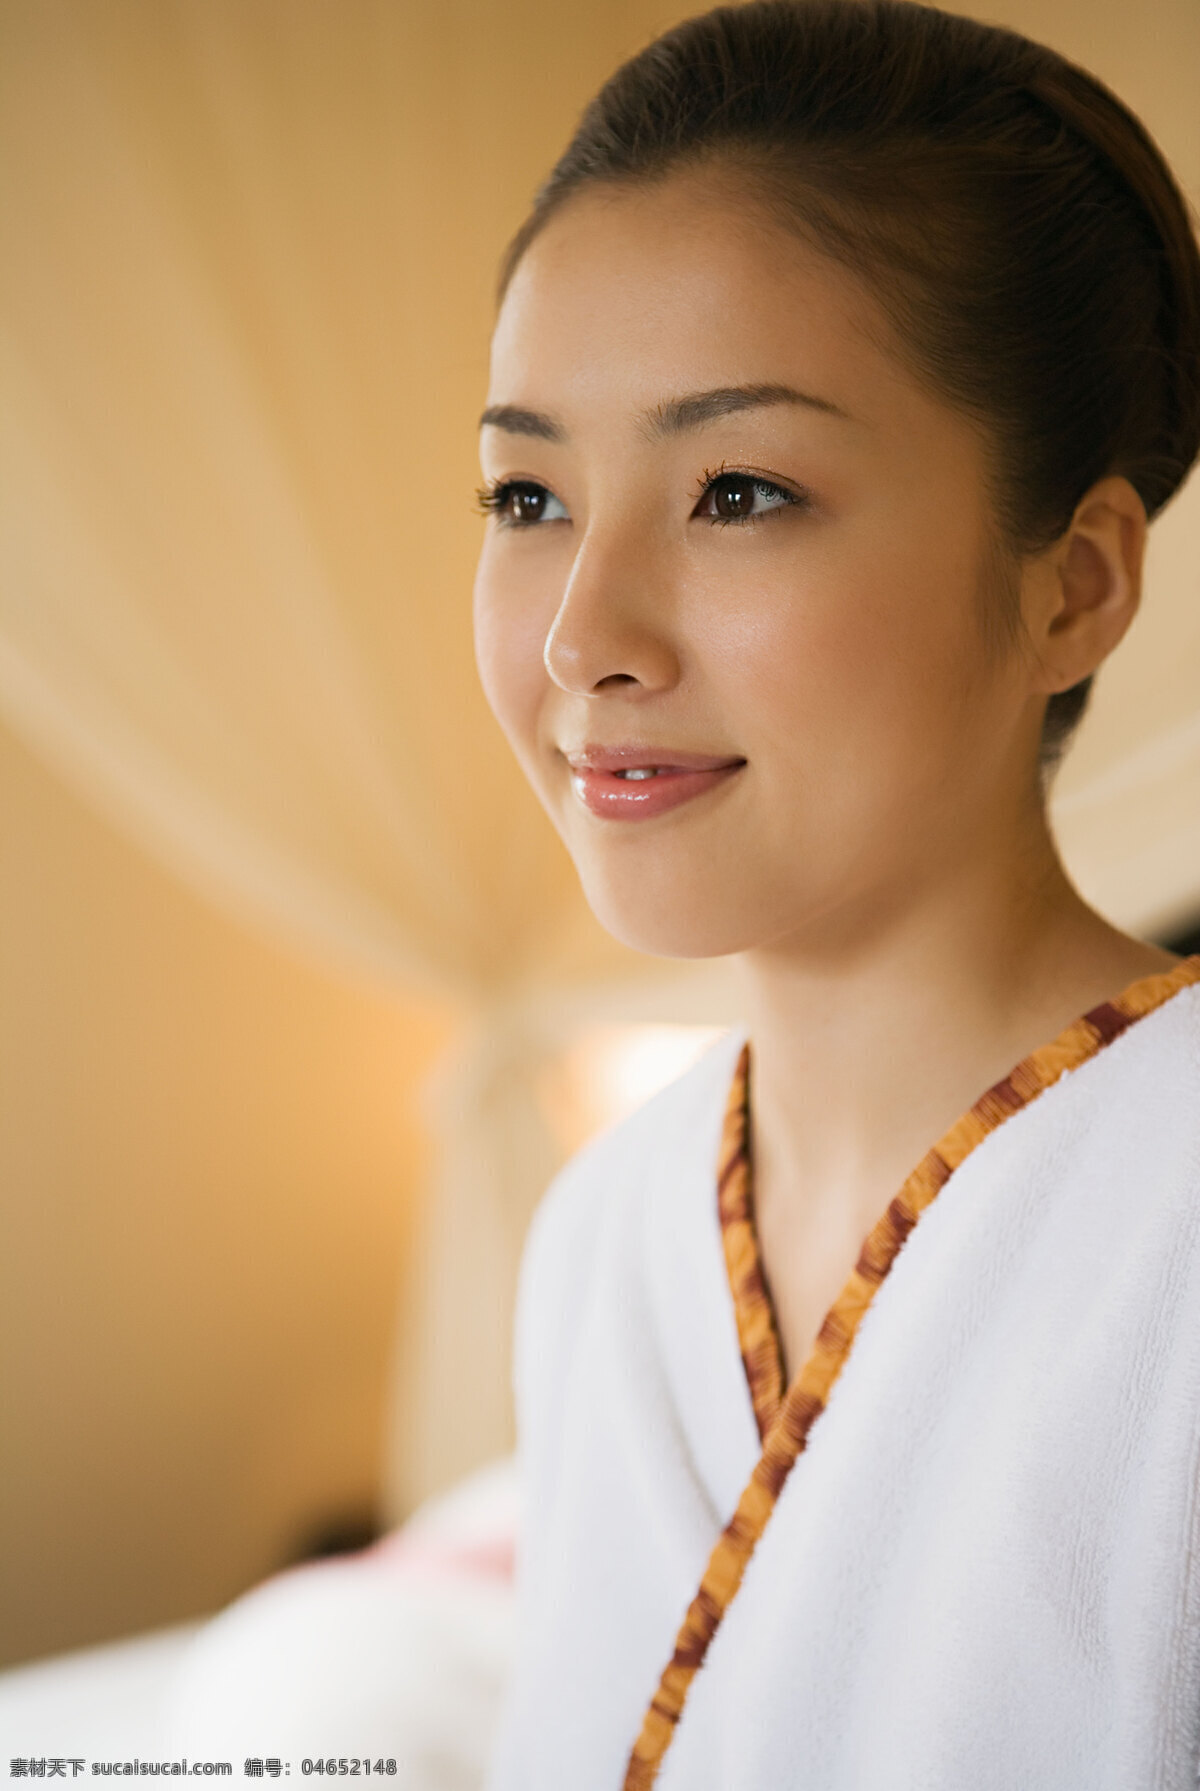 spa 美女图片 水疗 亚洲 美女 女人 按摩师 按摩 美容美体 瘦身 养生 台湾 温泉 白色 浴袍 性感 微笑 高清图片 人物图片